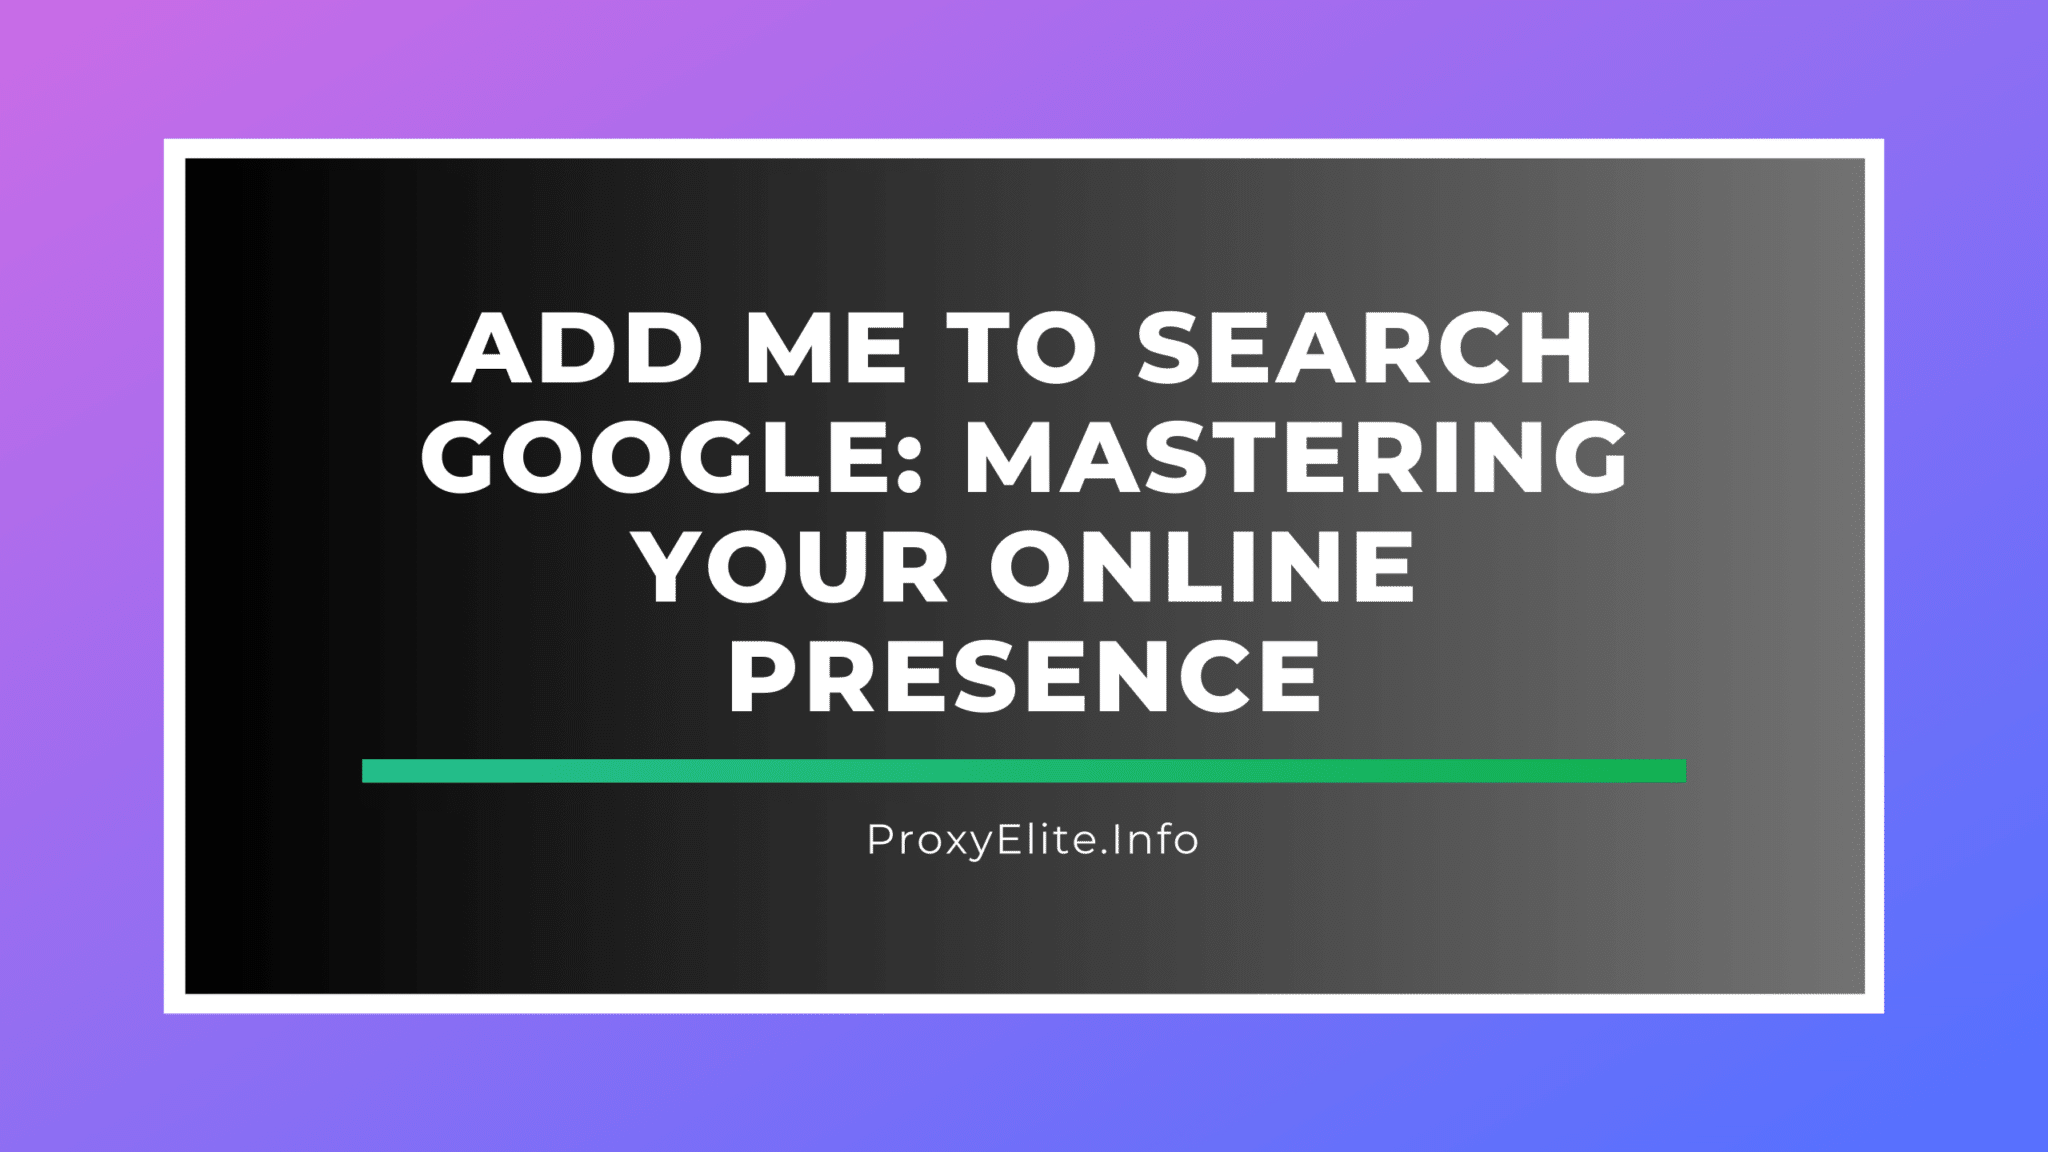 Agrégame para buscar en Google: dominar su presencia en línea